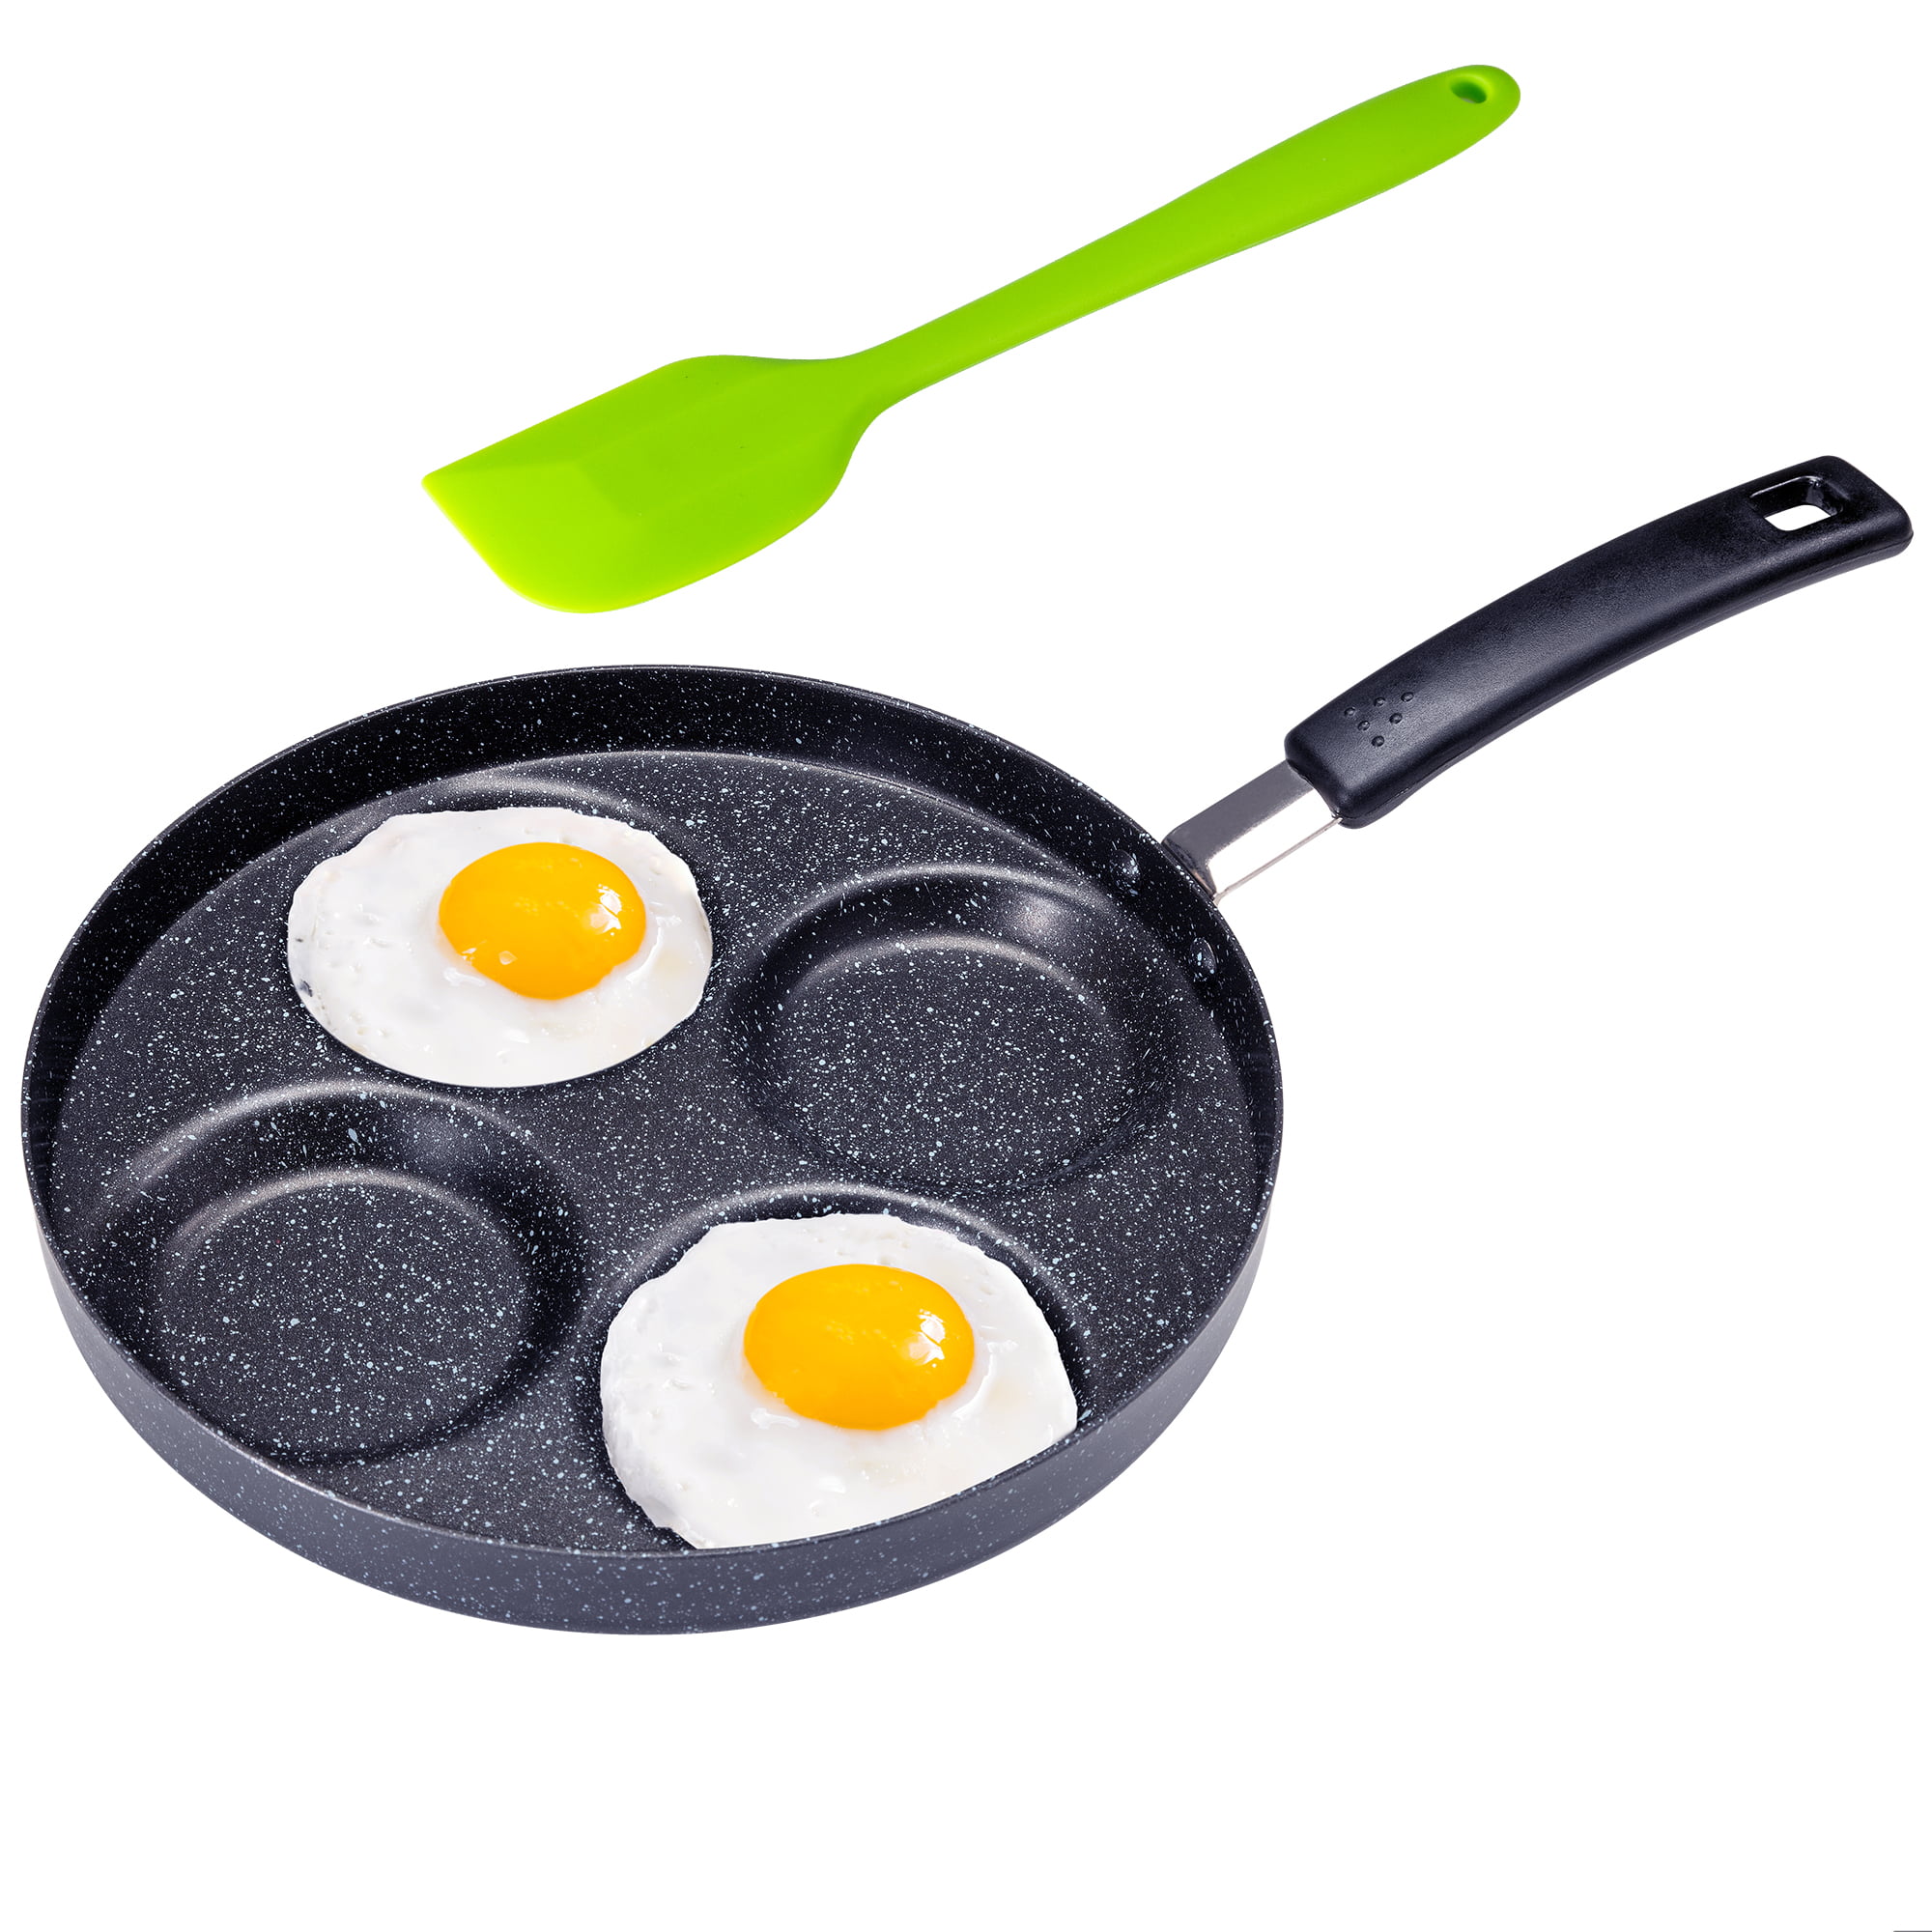 IAXSEE Egg Frying Pan Nonstick Pancake Pans 4-Cups cookware Pancake,  Omelette Pan Aluminium Alloy Egg cooker